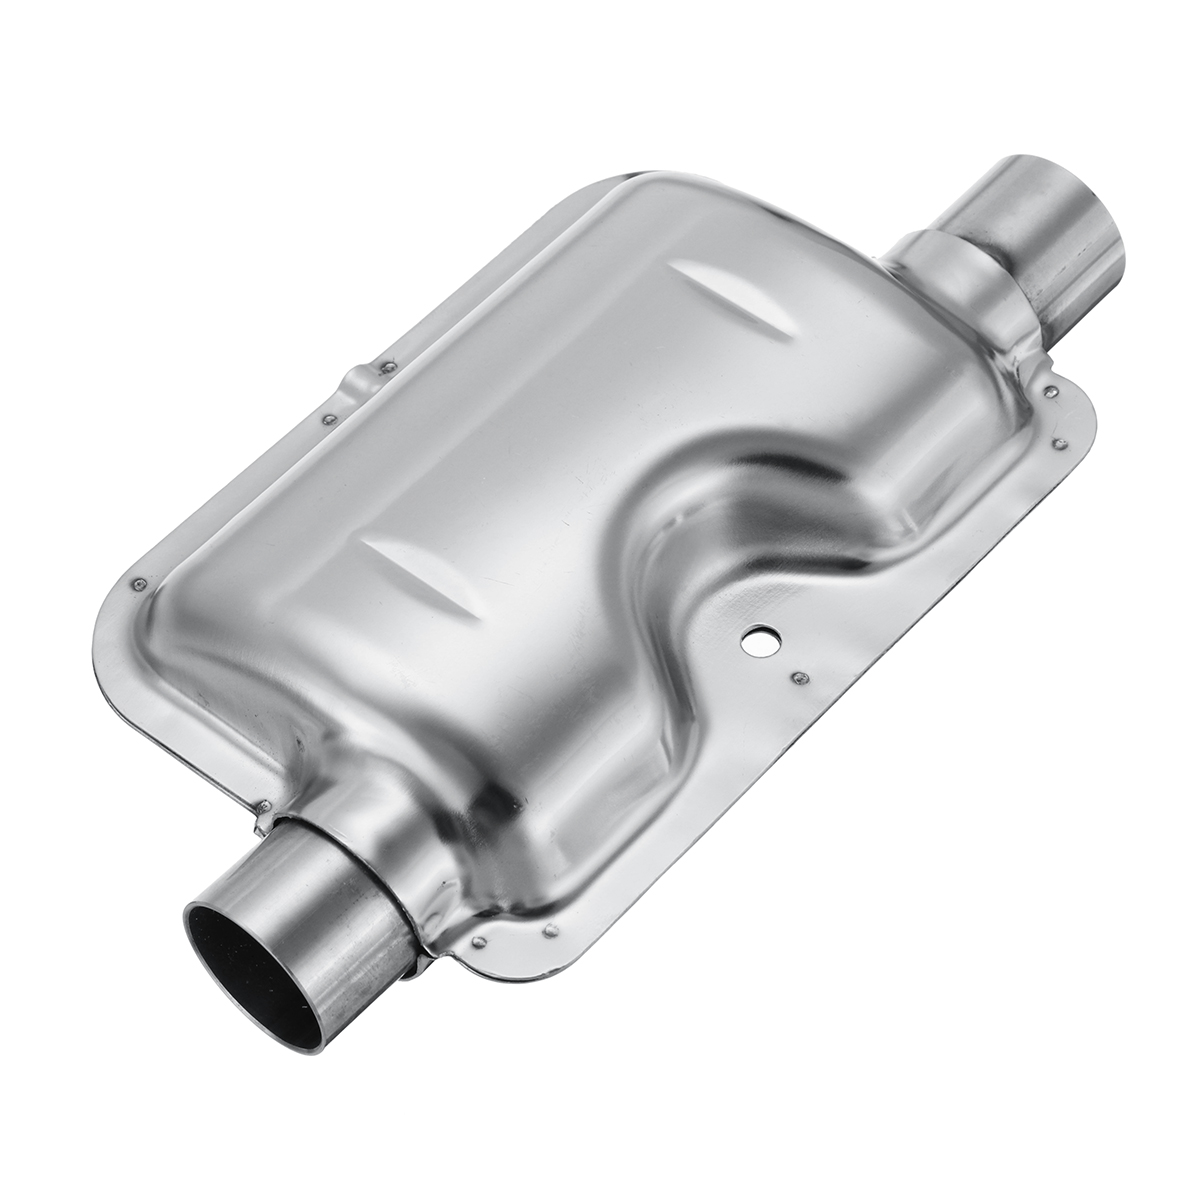 Diesel-Heater-Exhaust-Muffler-Pipe-Silencer-Clamps-Bracket-1366648-2